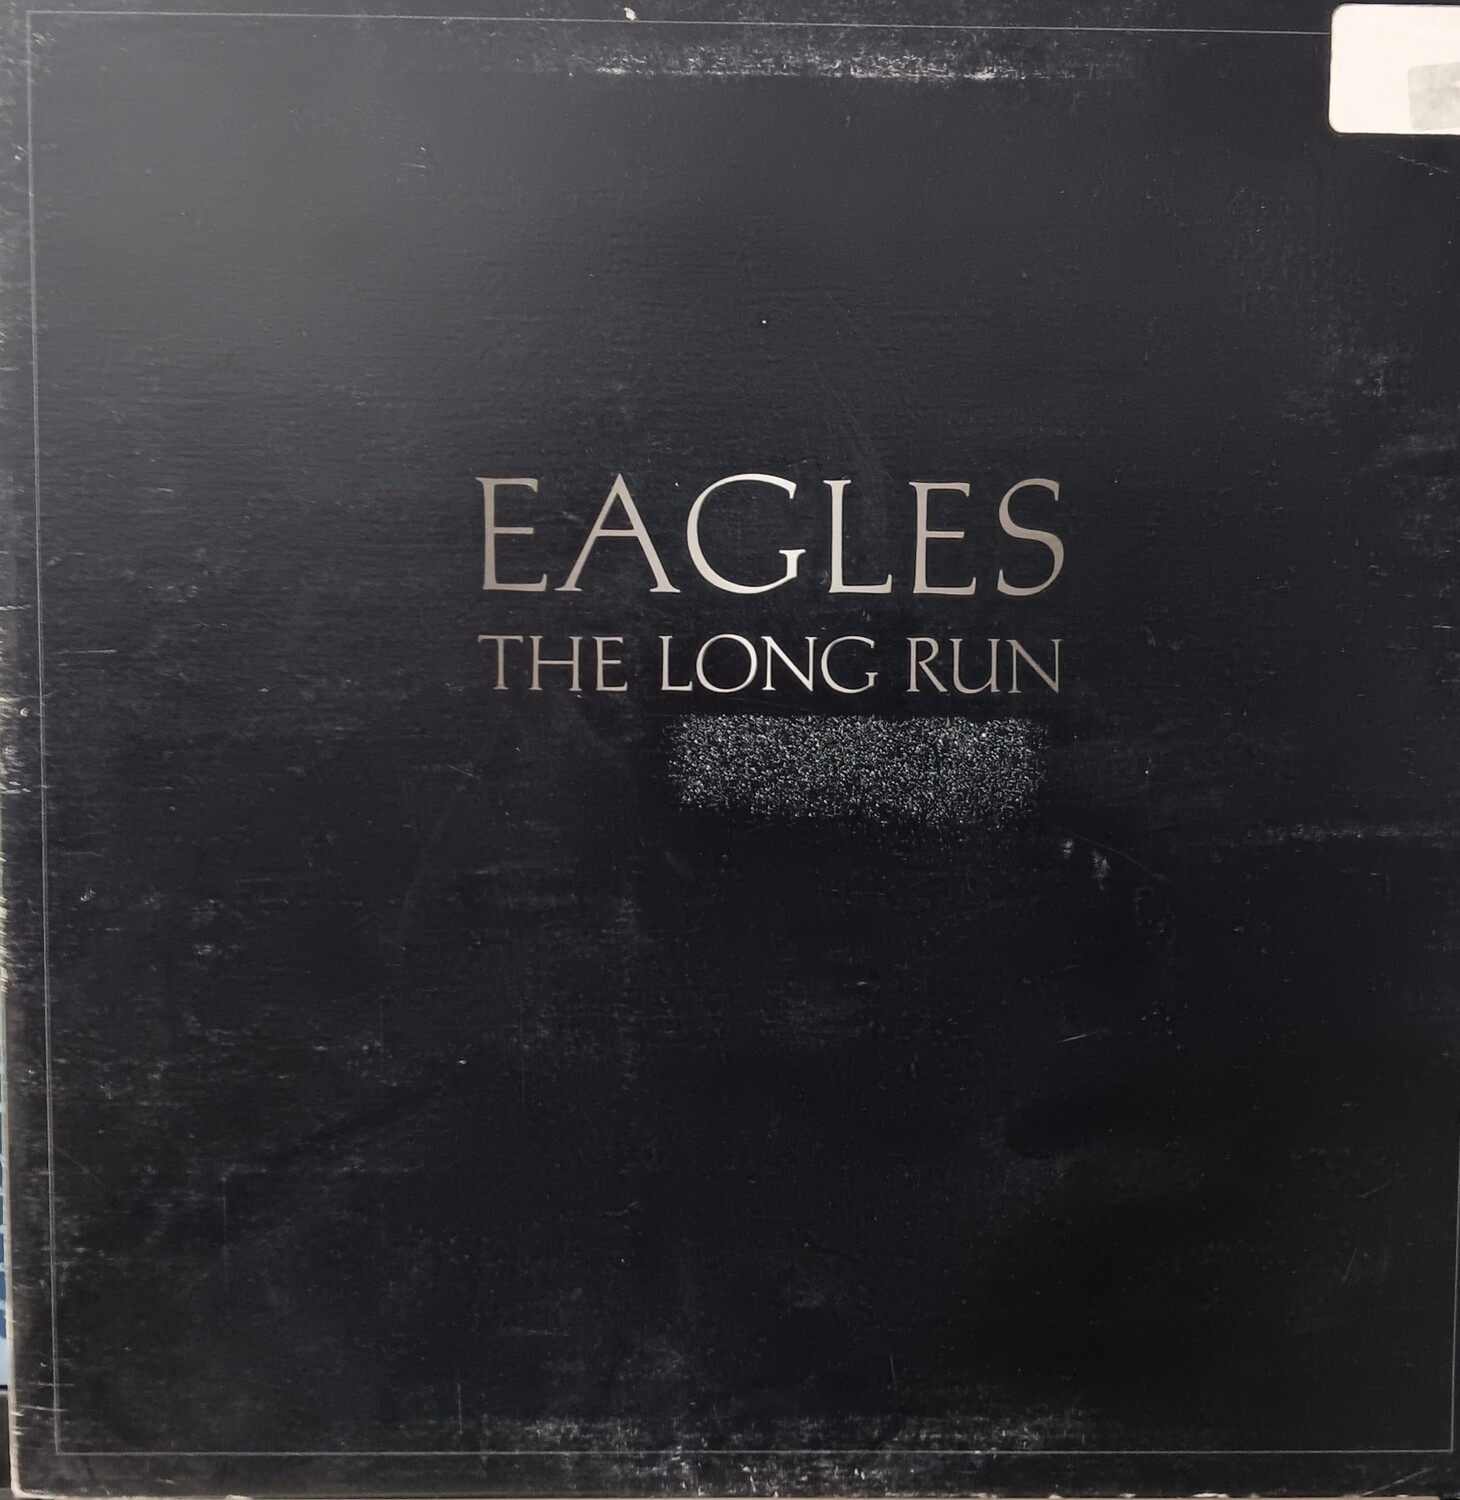 EAGLES - The long run